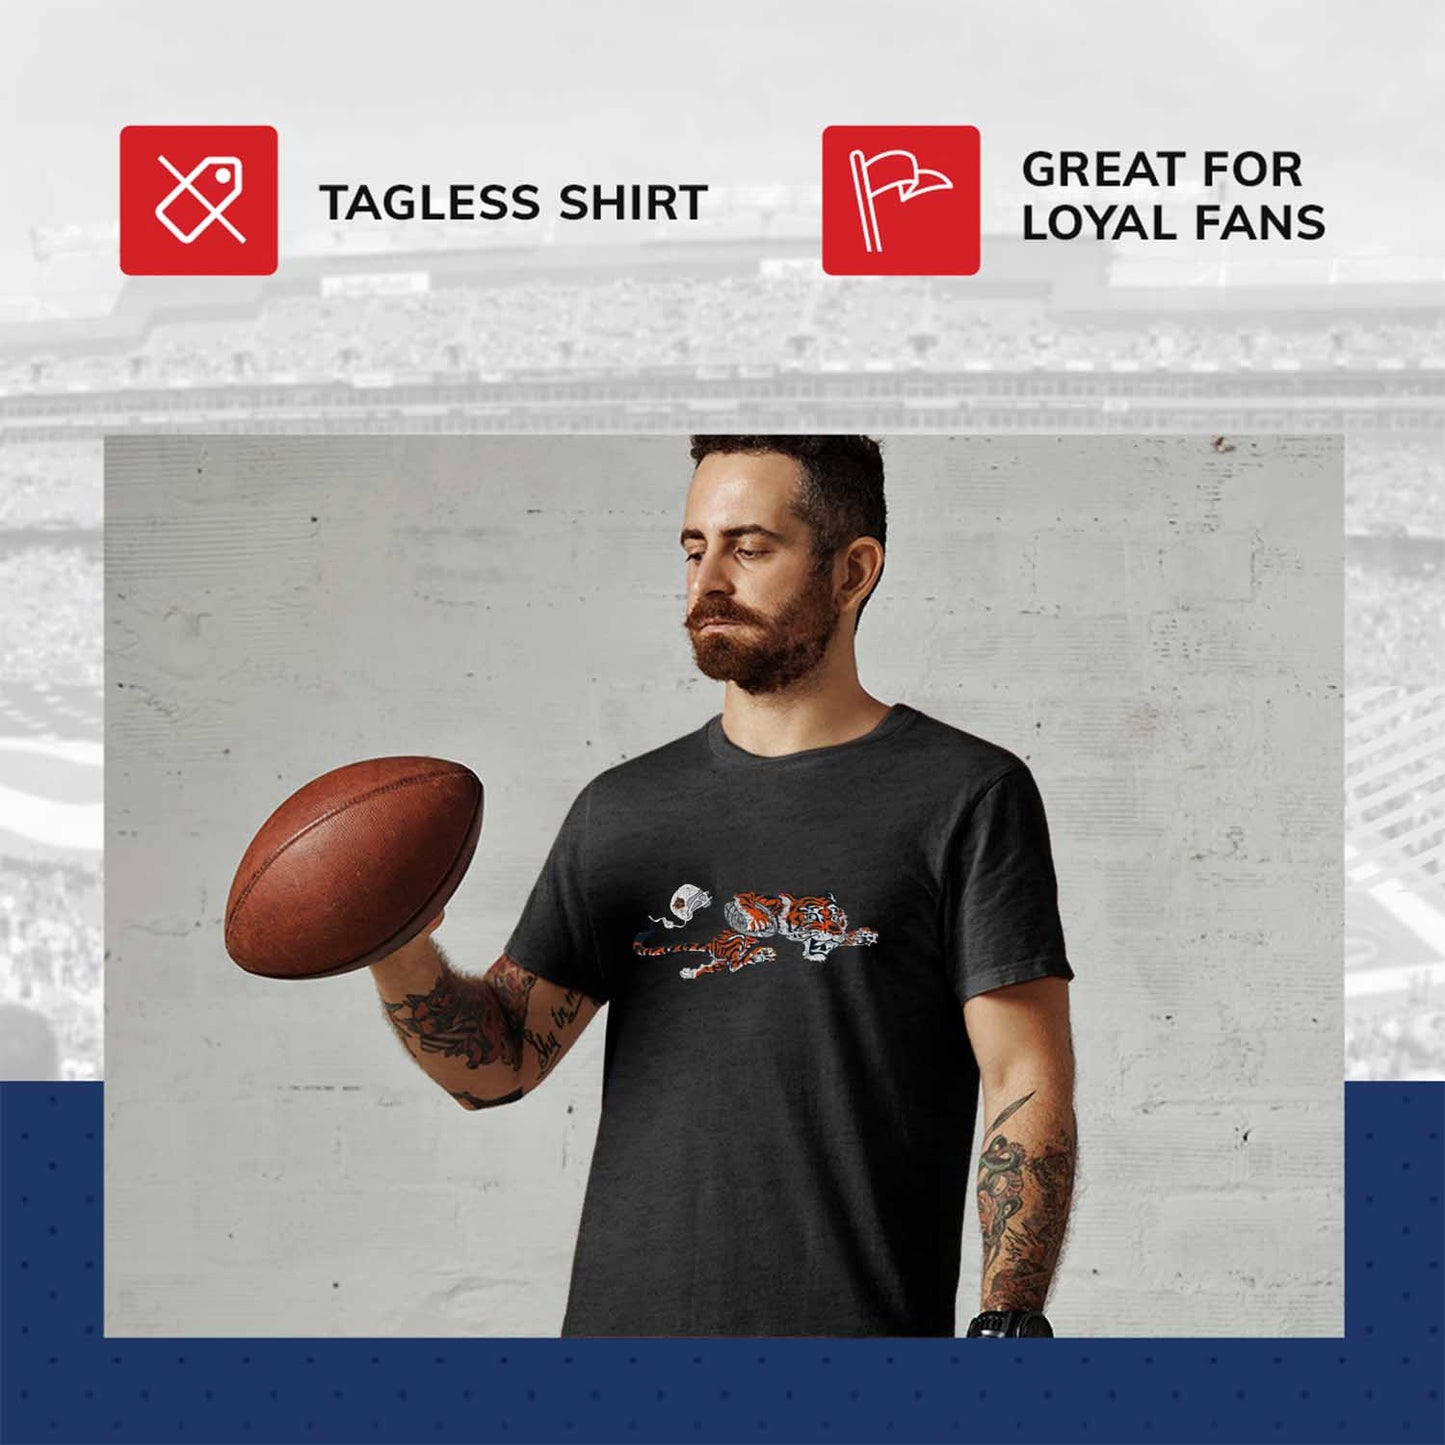 Cincinnati Bengals NFL Modern Throwback T-shirt - Black